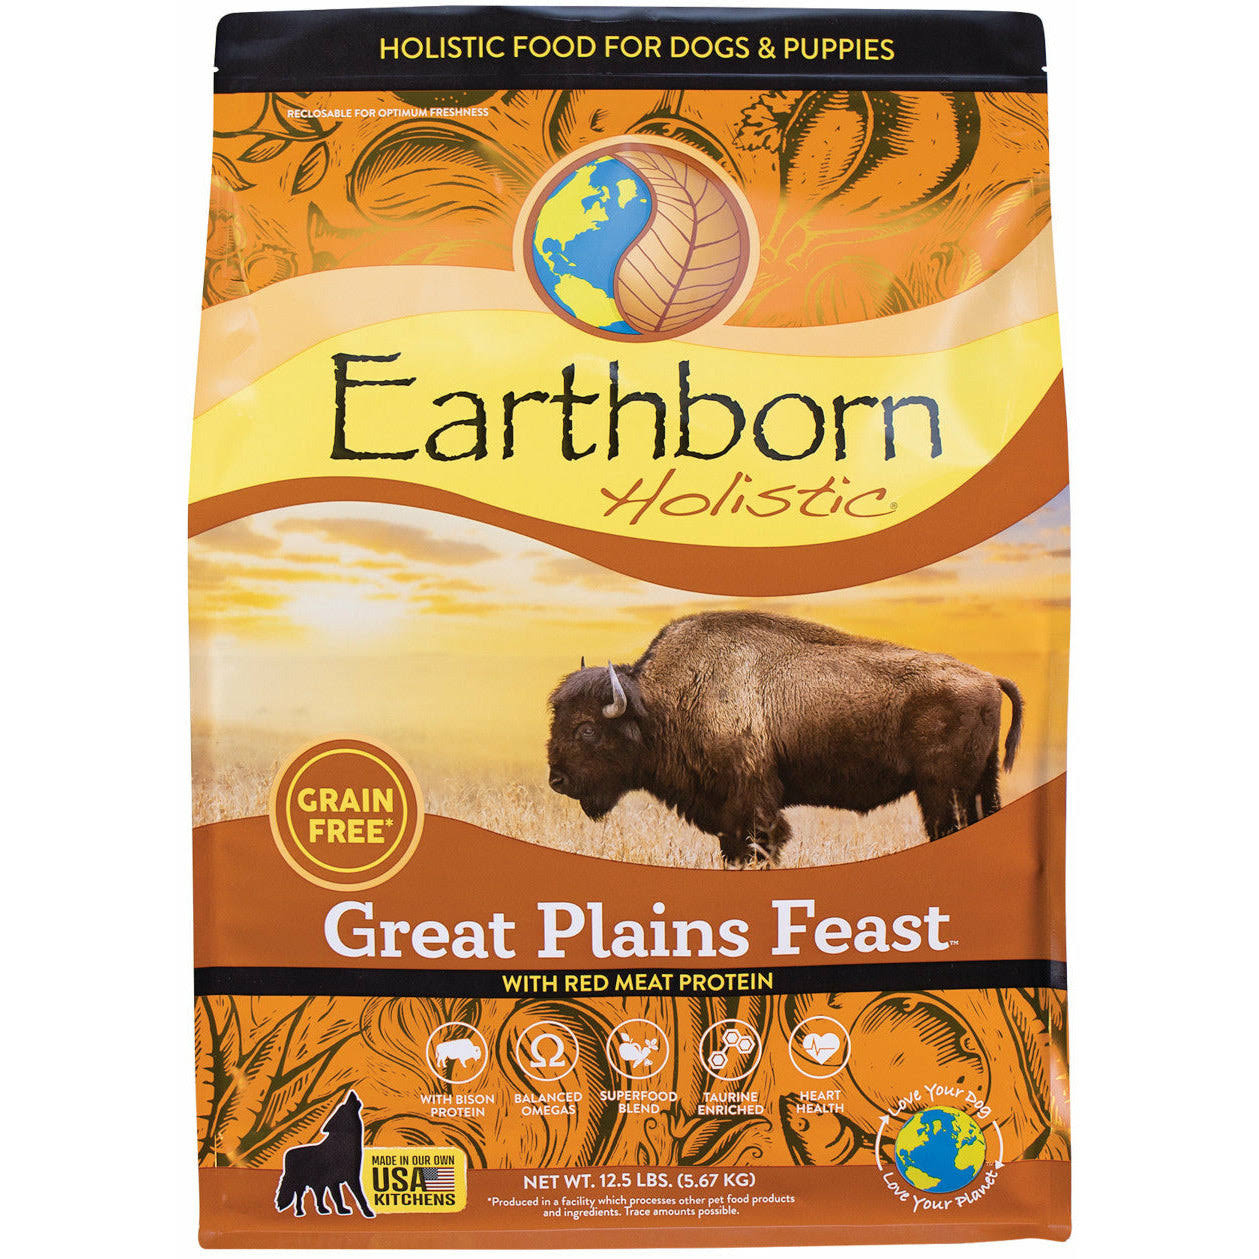 Earthborn Holistic Great Plains Feast Grain Free Natural Dog Food 12.5-lb